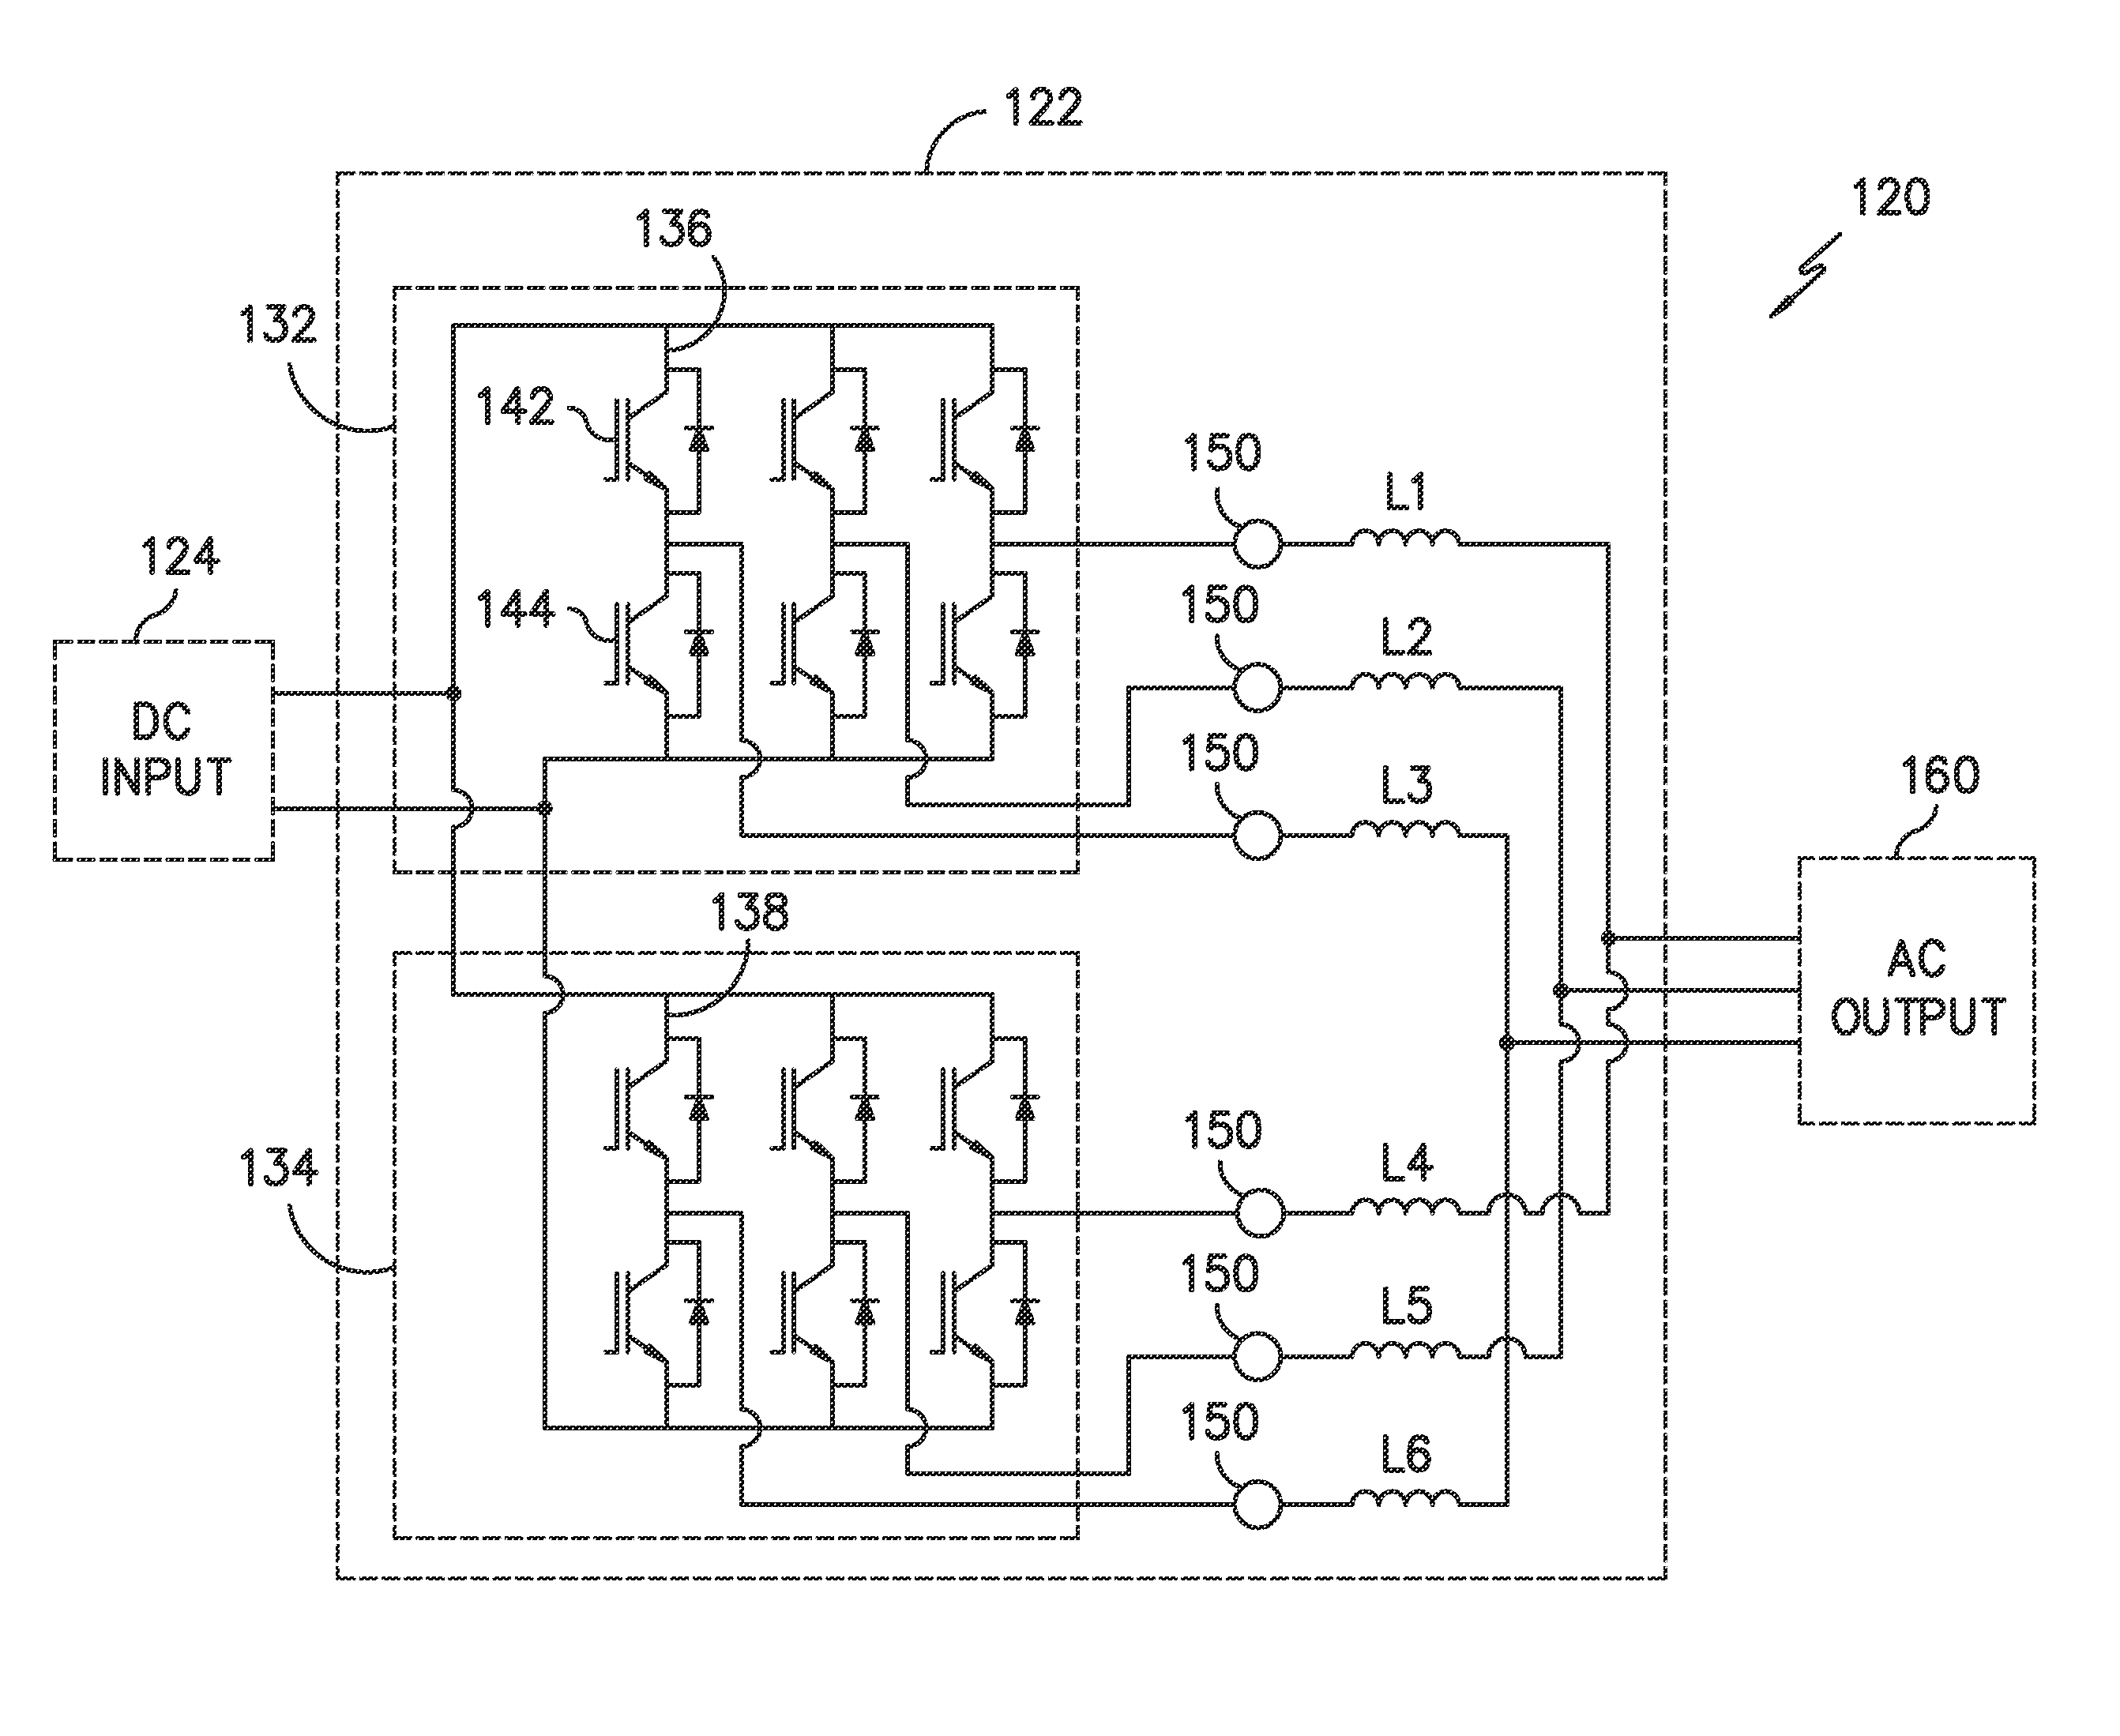 Control scheme for current balancing between parallel bridge circuits